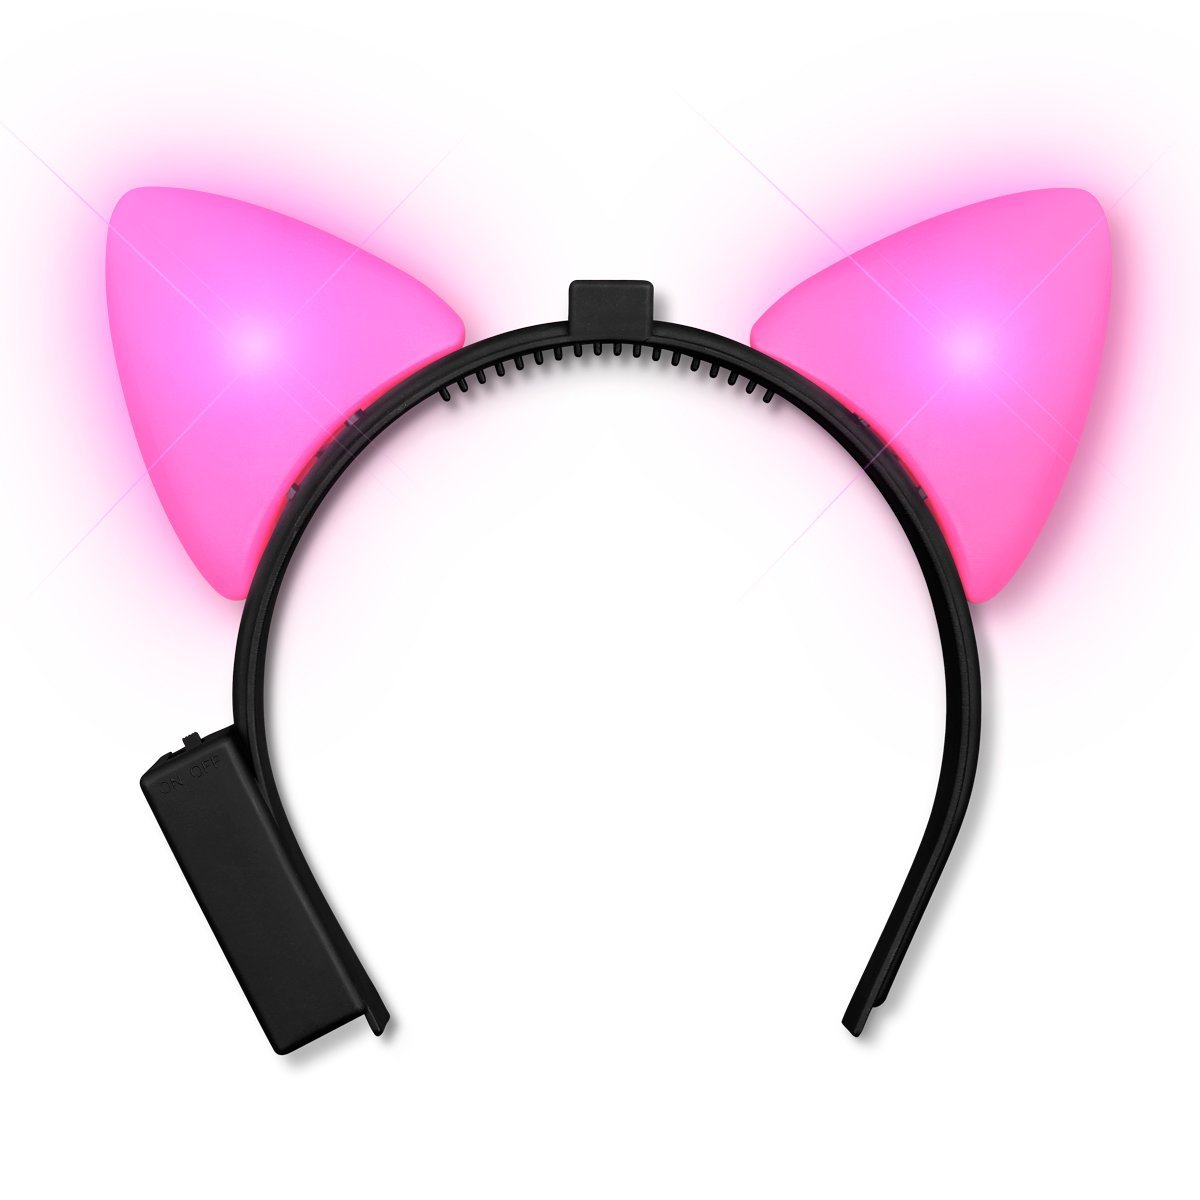 LED Animal Ears Steady Pink Light Headband All Products